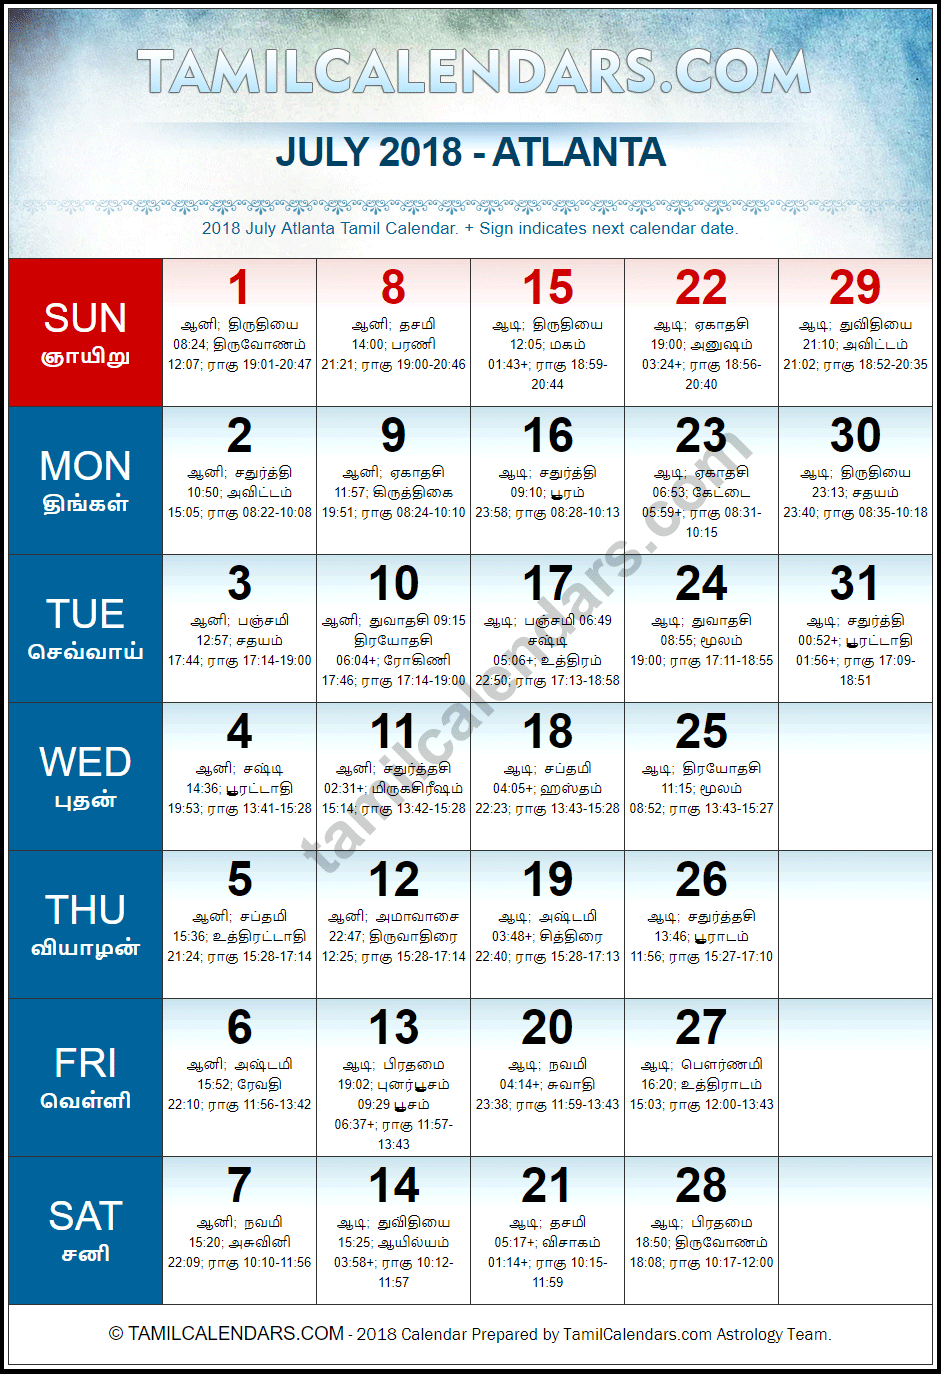 July 2018 Tamil Calendar for Atlanta, USA